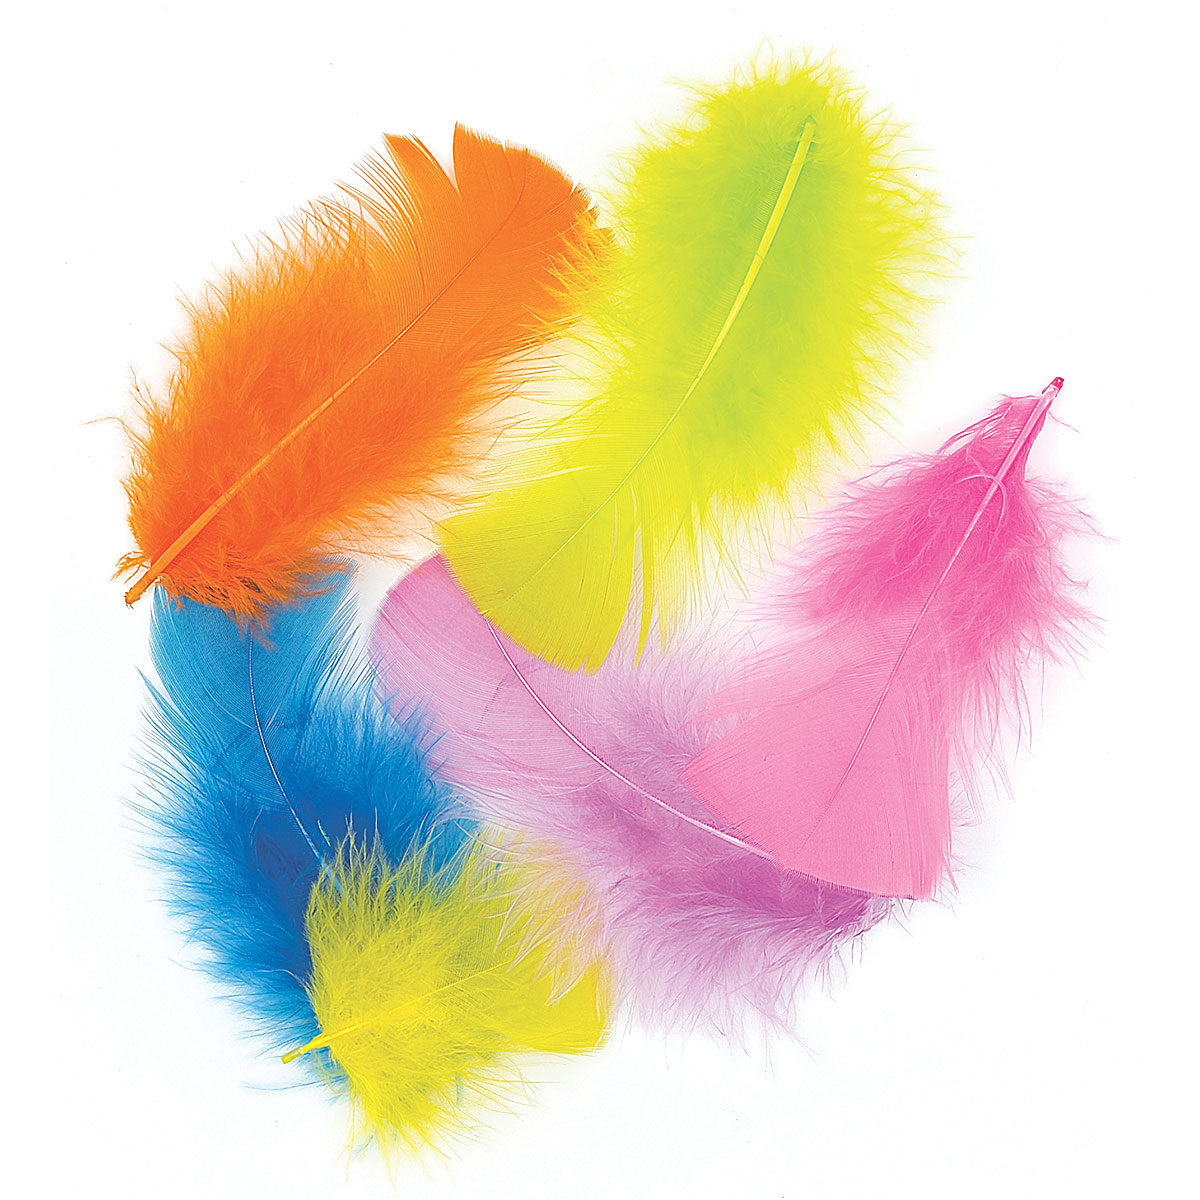 Creativity Street Maribou Feathers